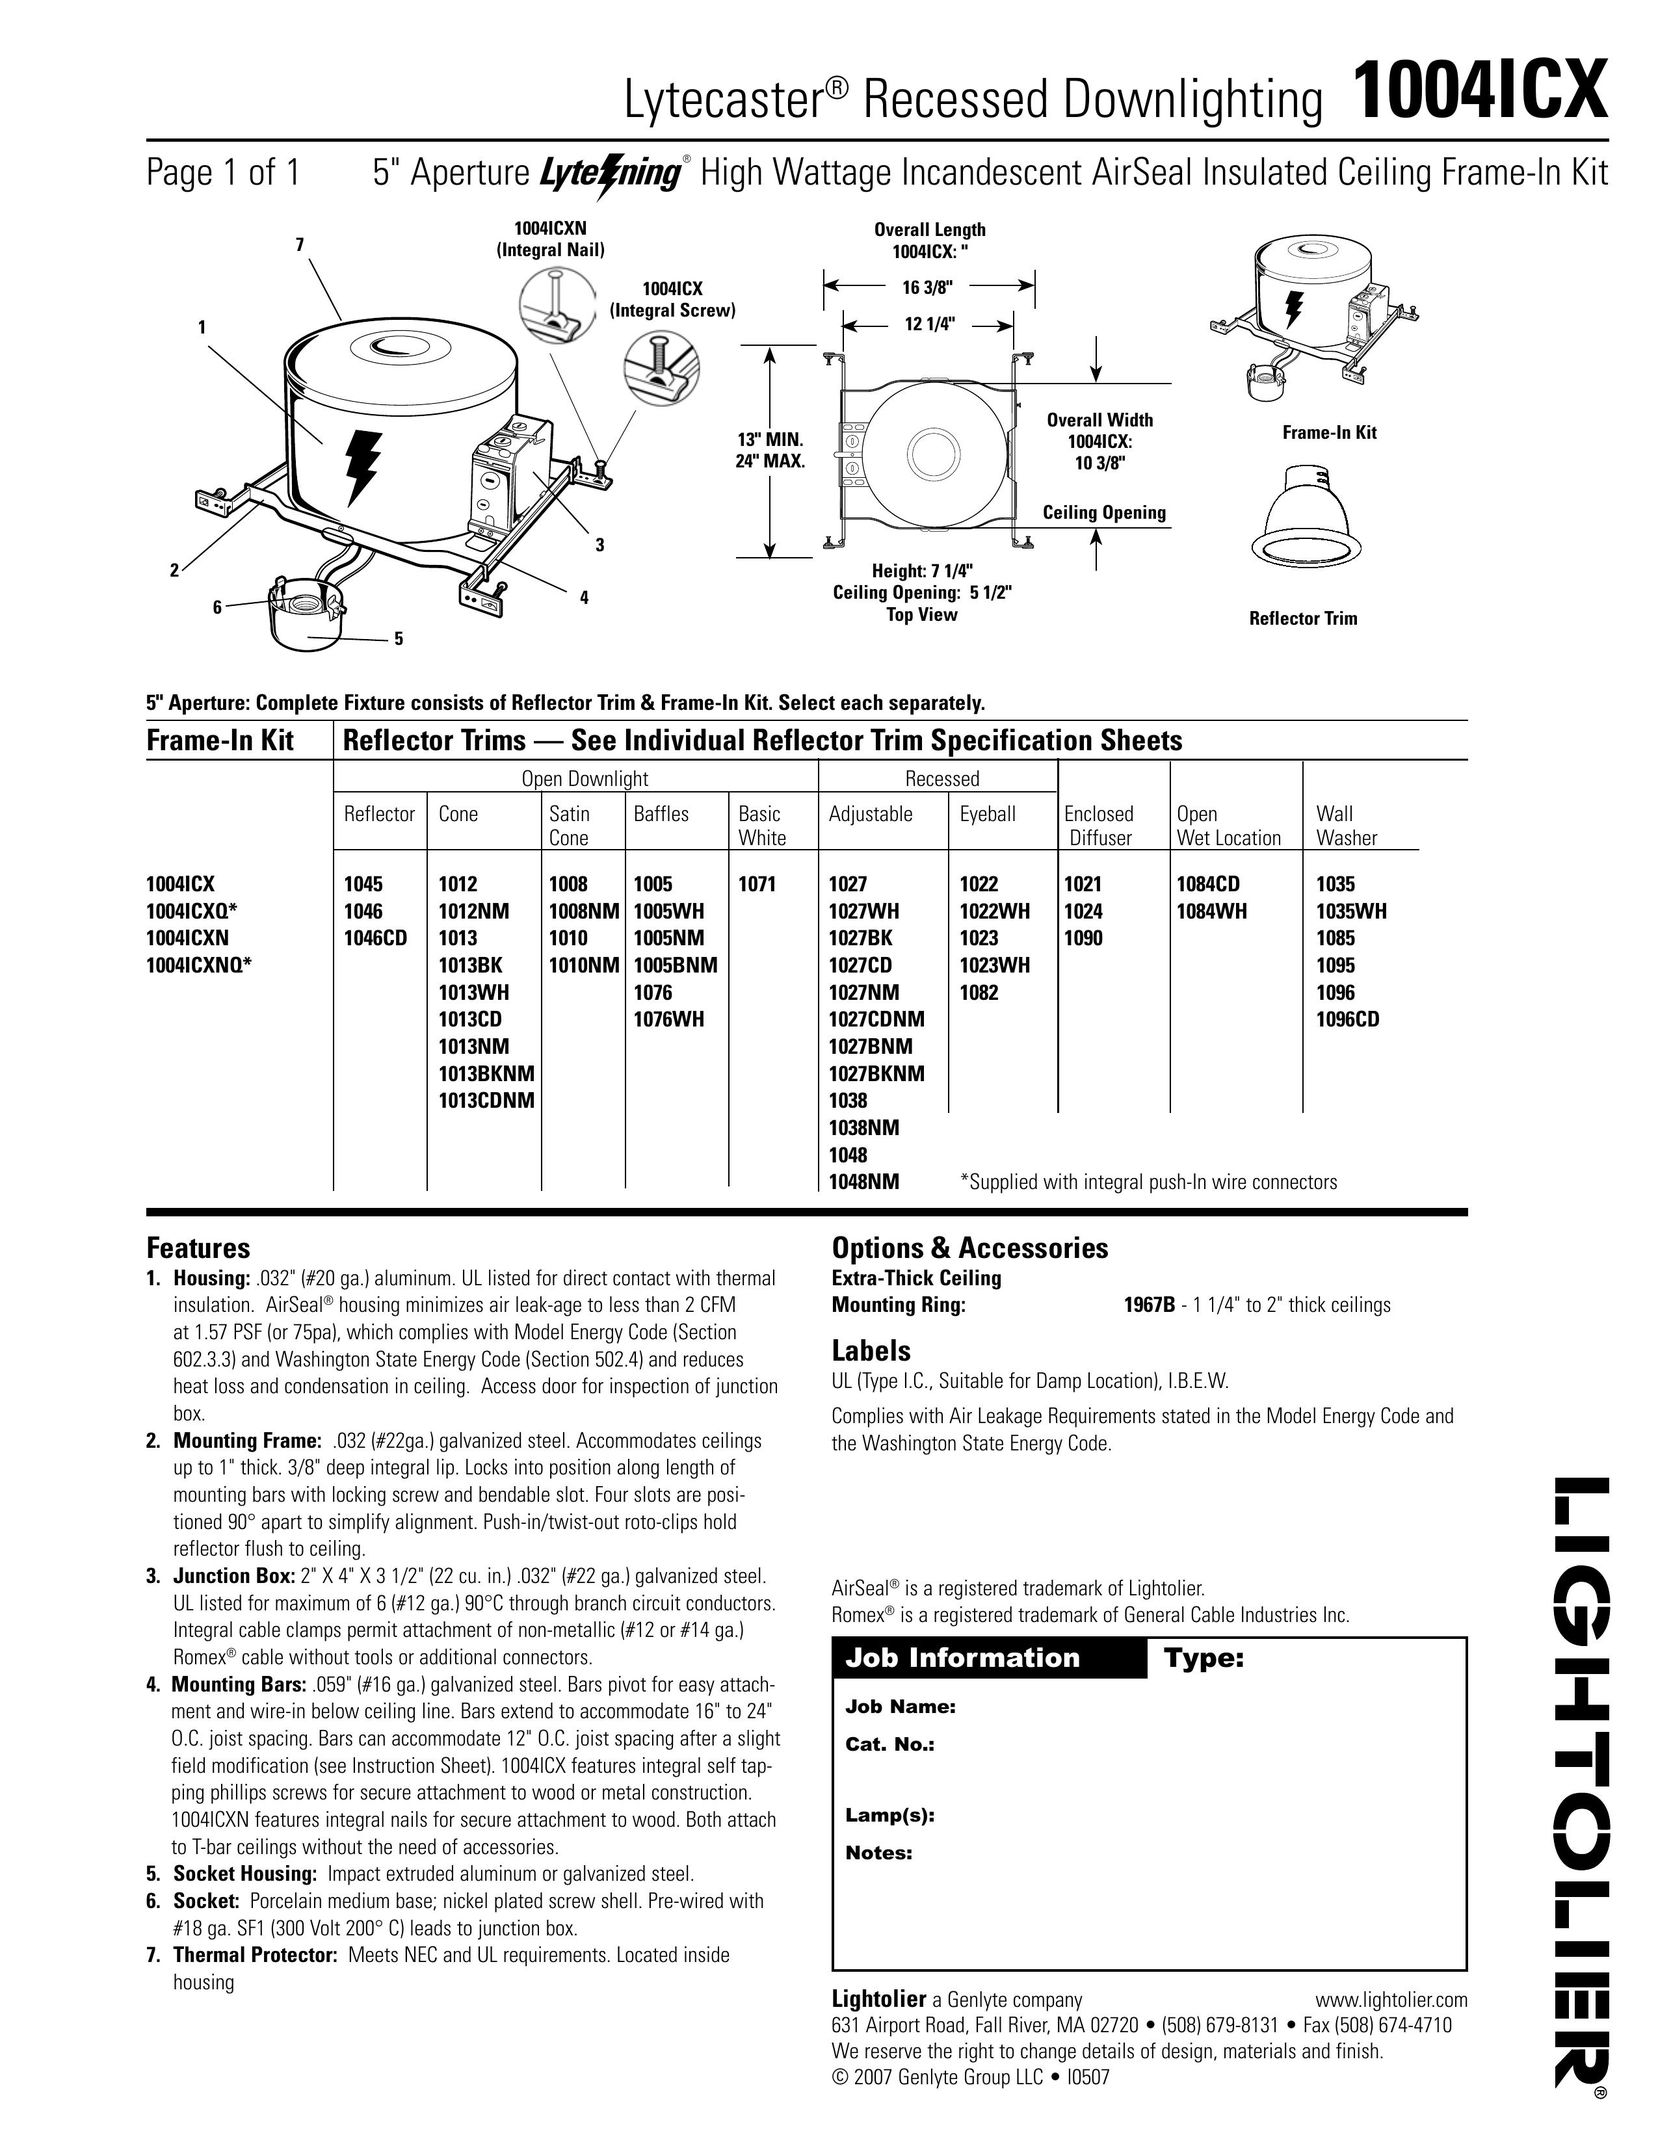 Lightolier 1004ICX Indoor Furnishings User Manual